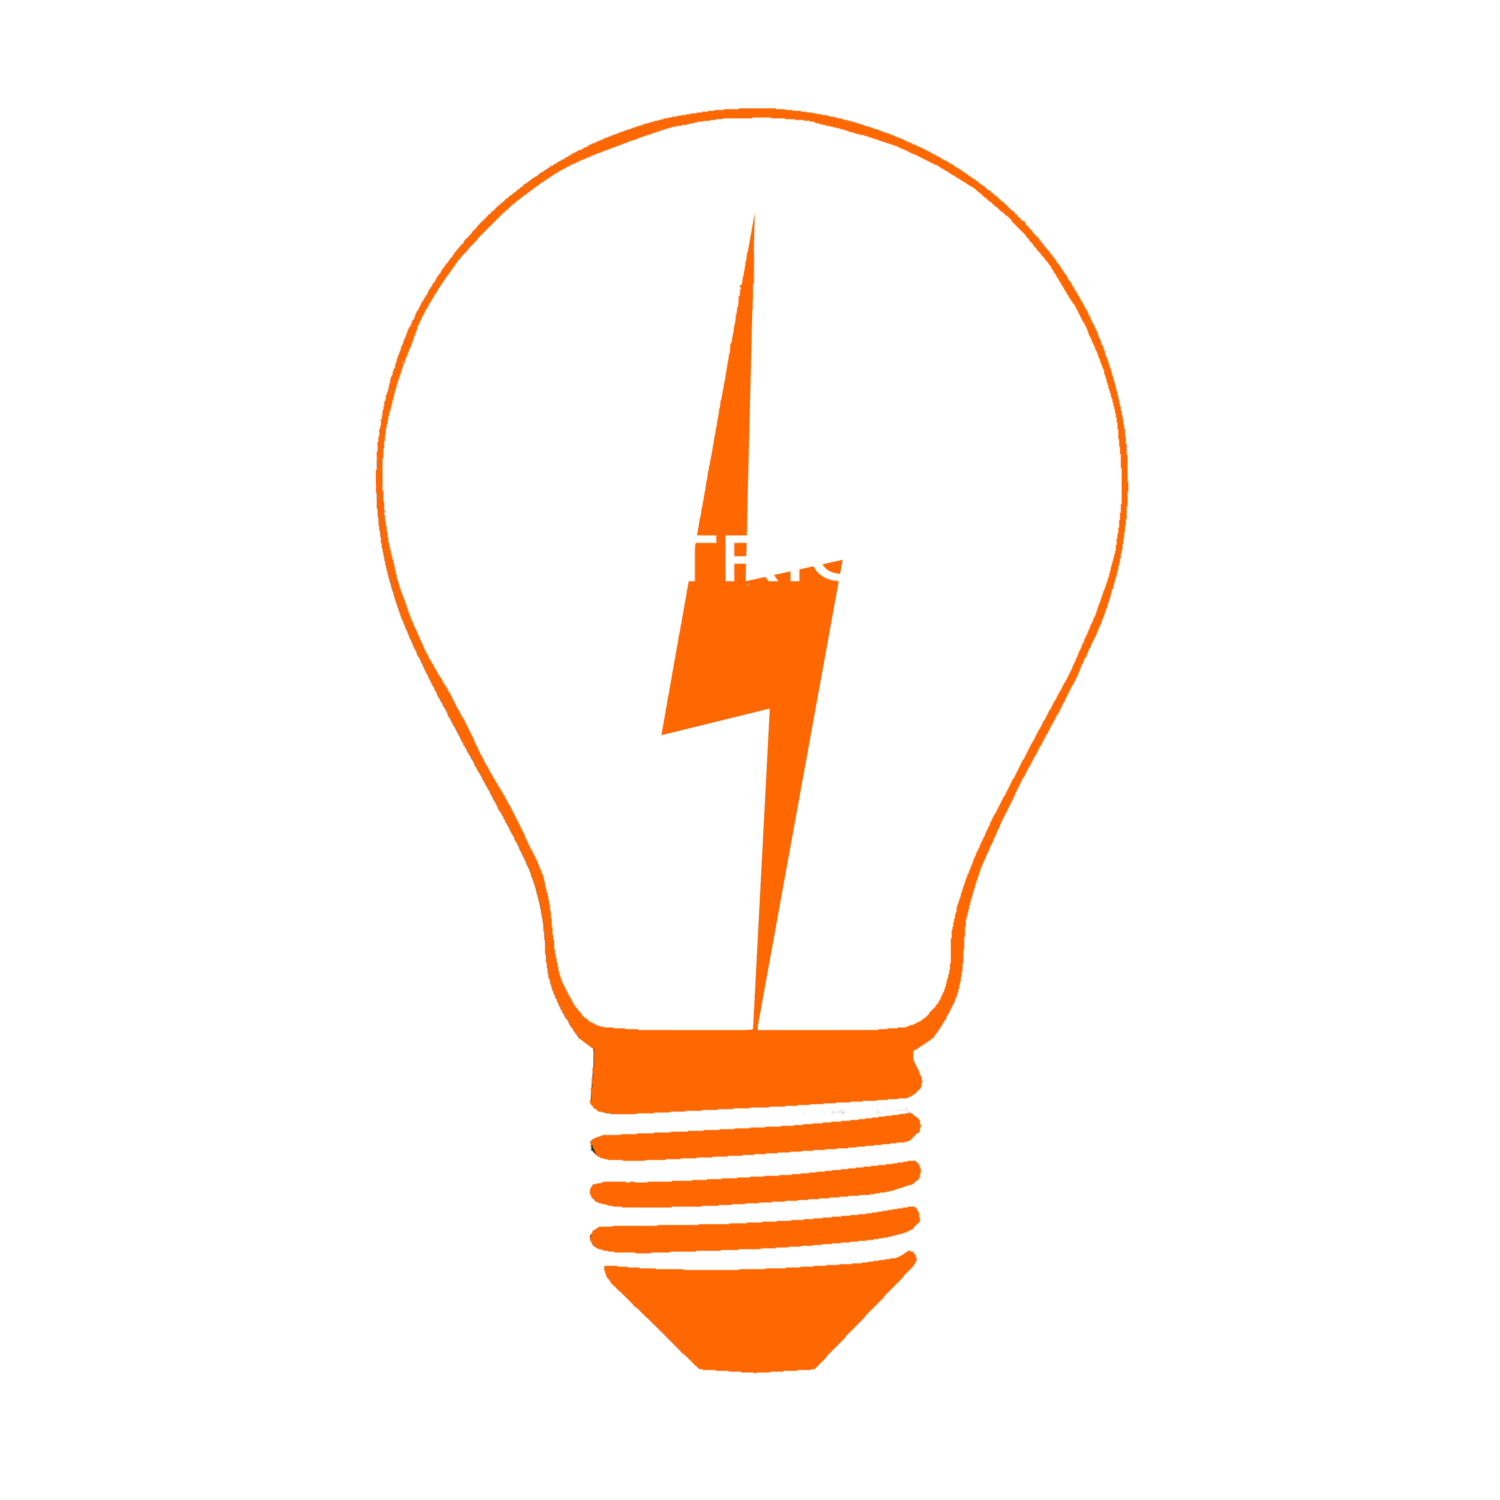 HG Electric, Inc. 